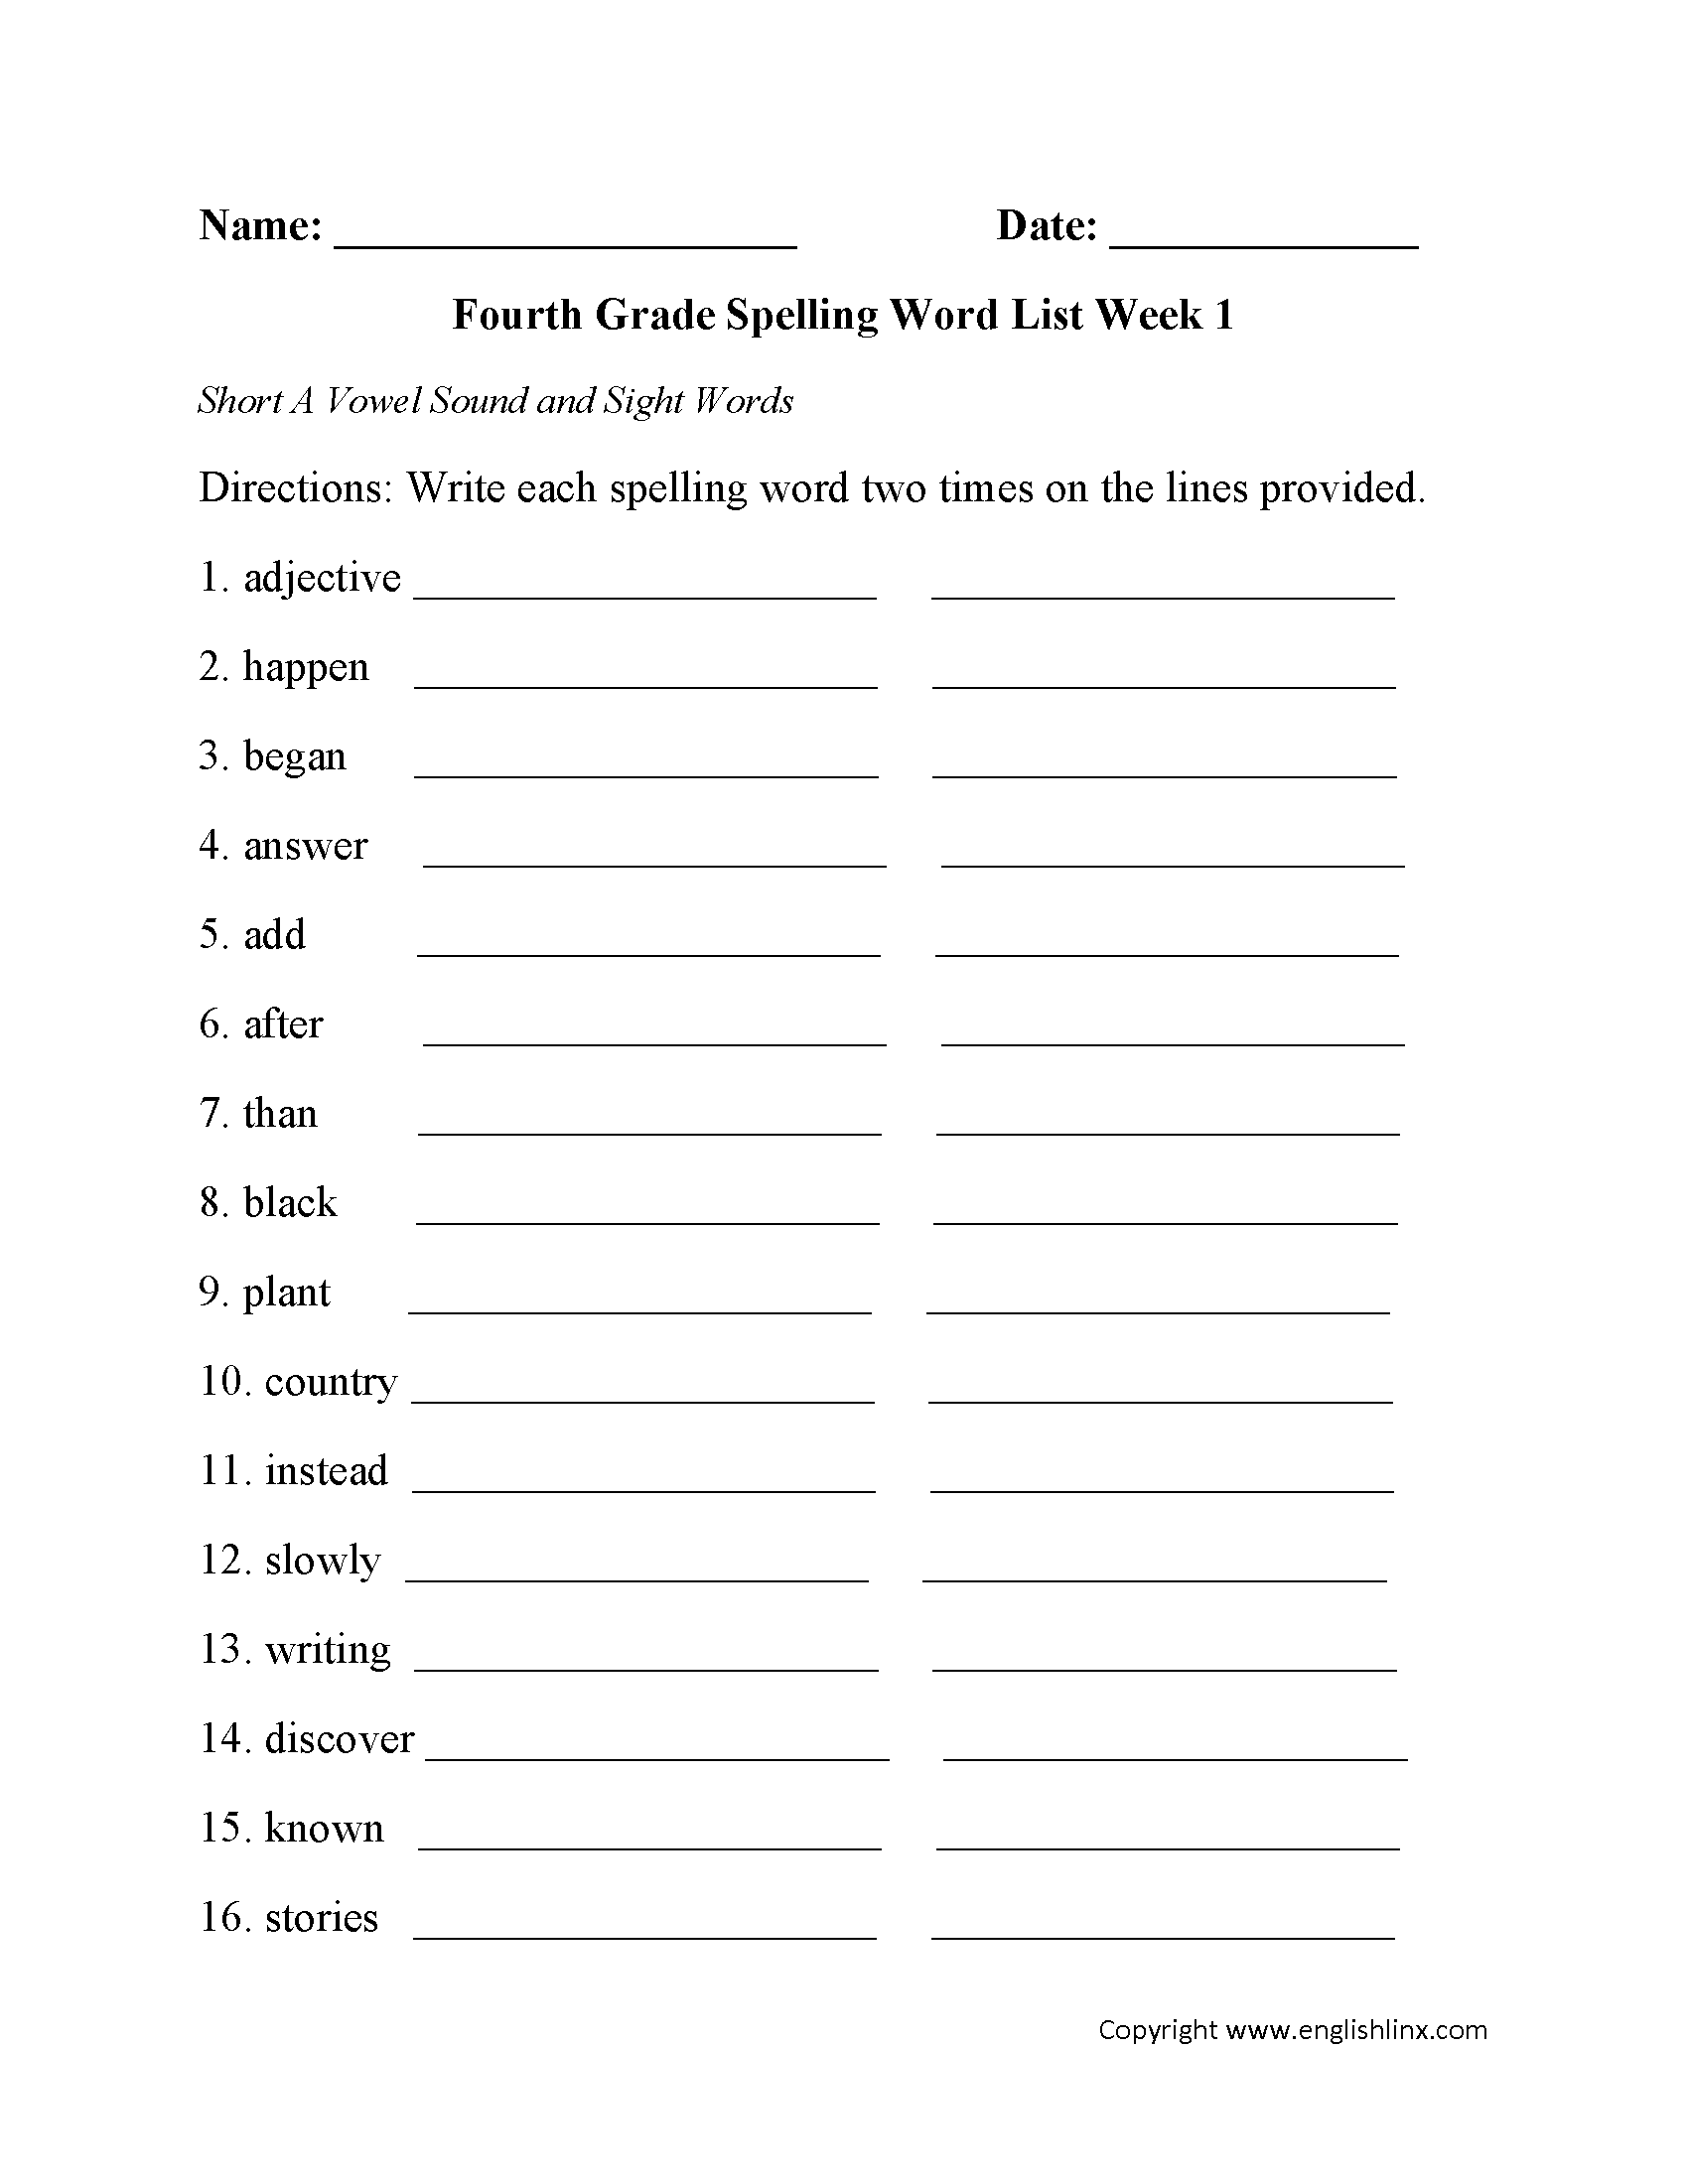 Fourth Grade Spelling Words Worksheets